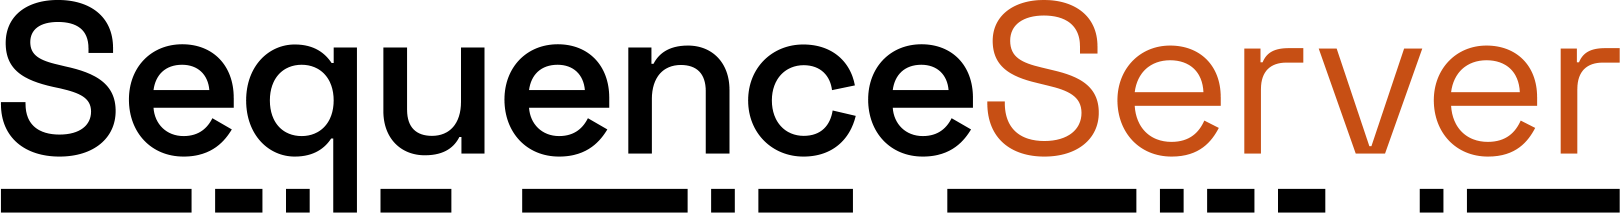 SequenceServer logo